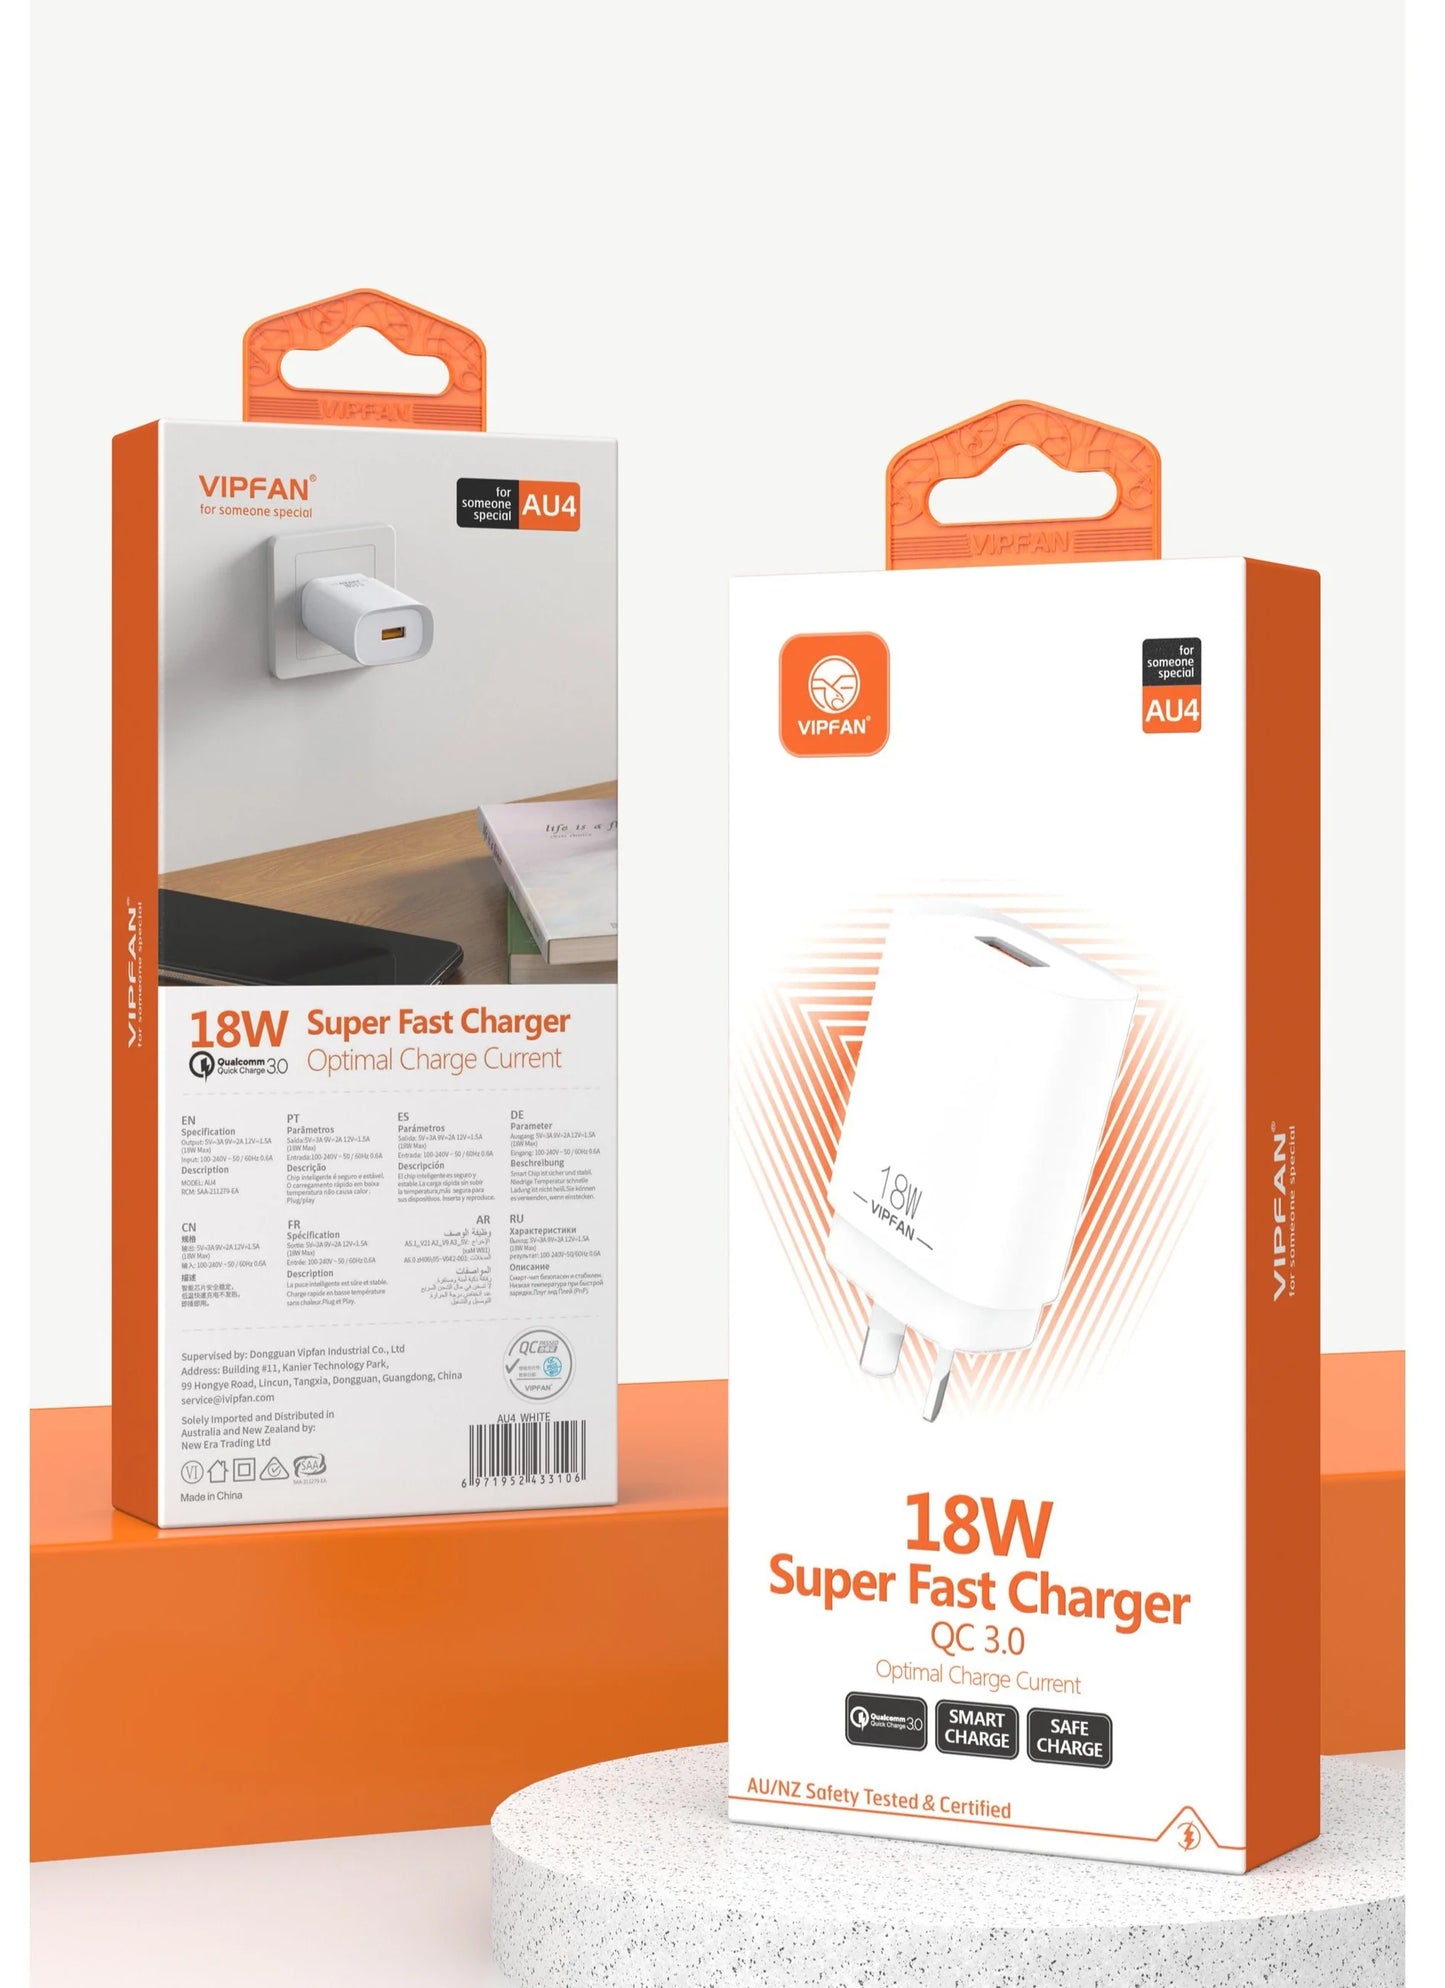 18W USB Super Fast Charger w/ QC3.0 (AU4) - SuperHub